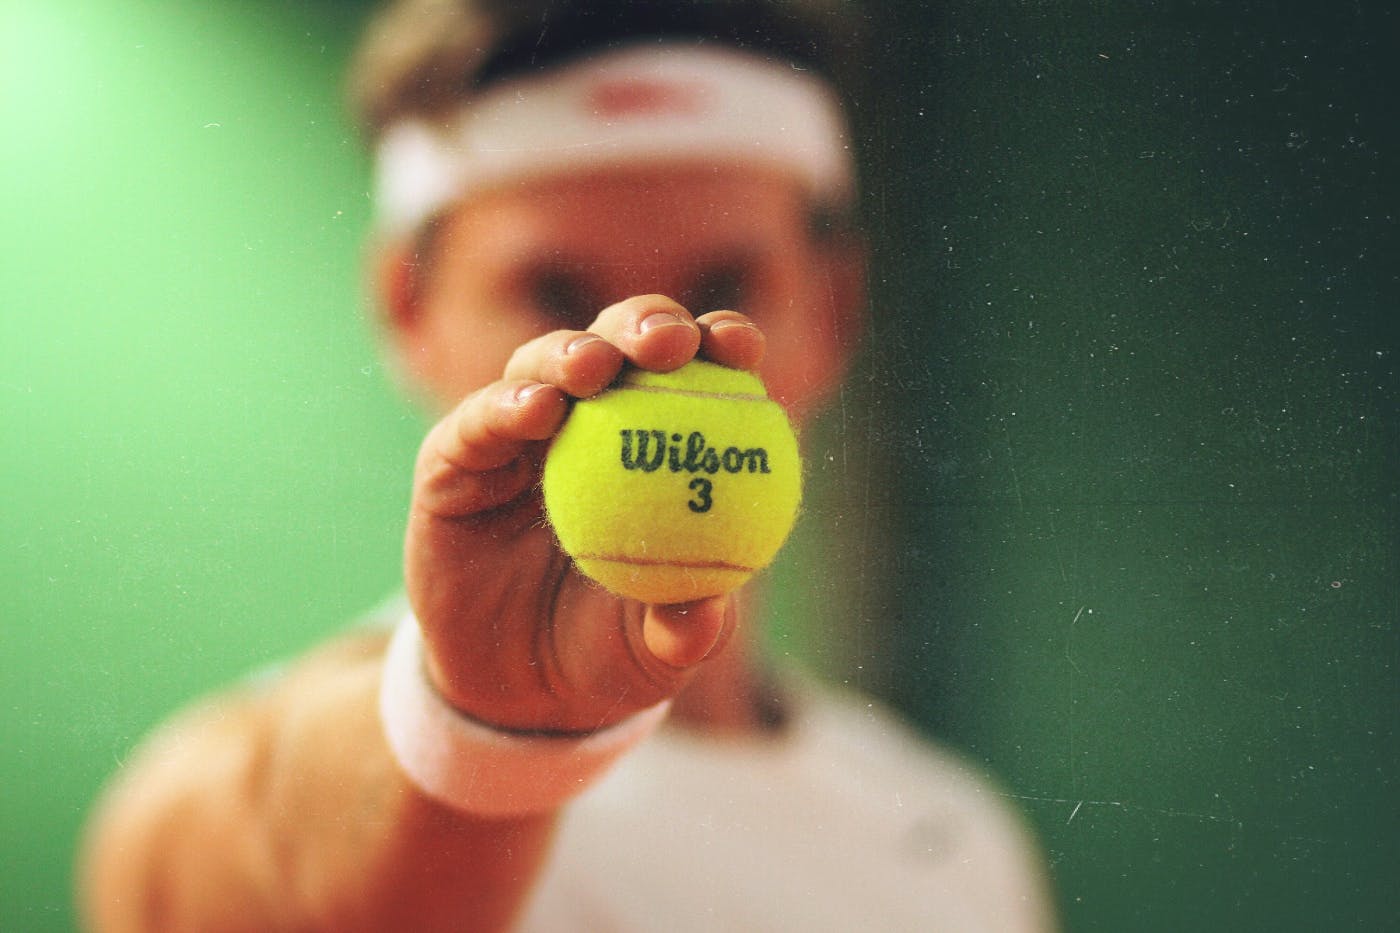 A tennis player holding a Wilson 3 ball toward the camera